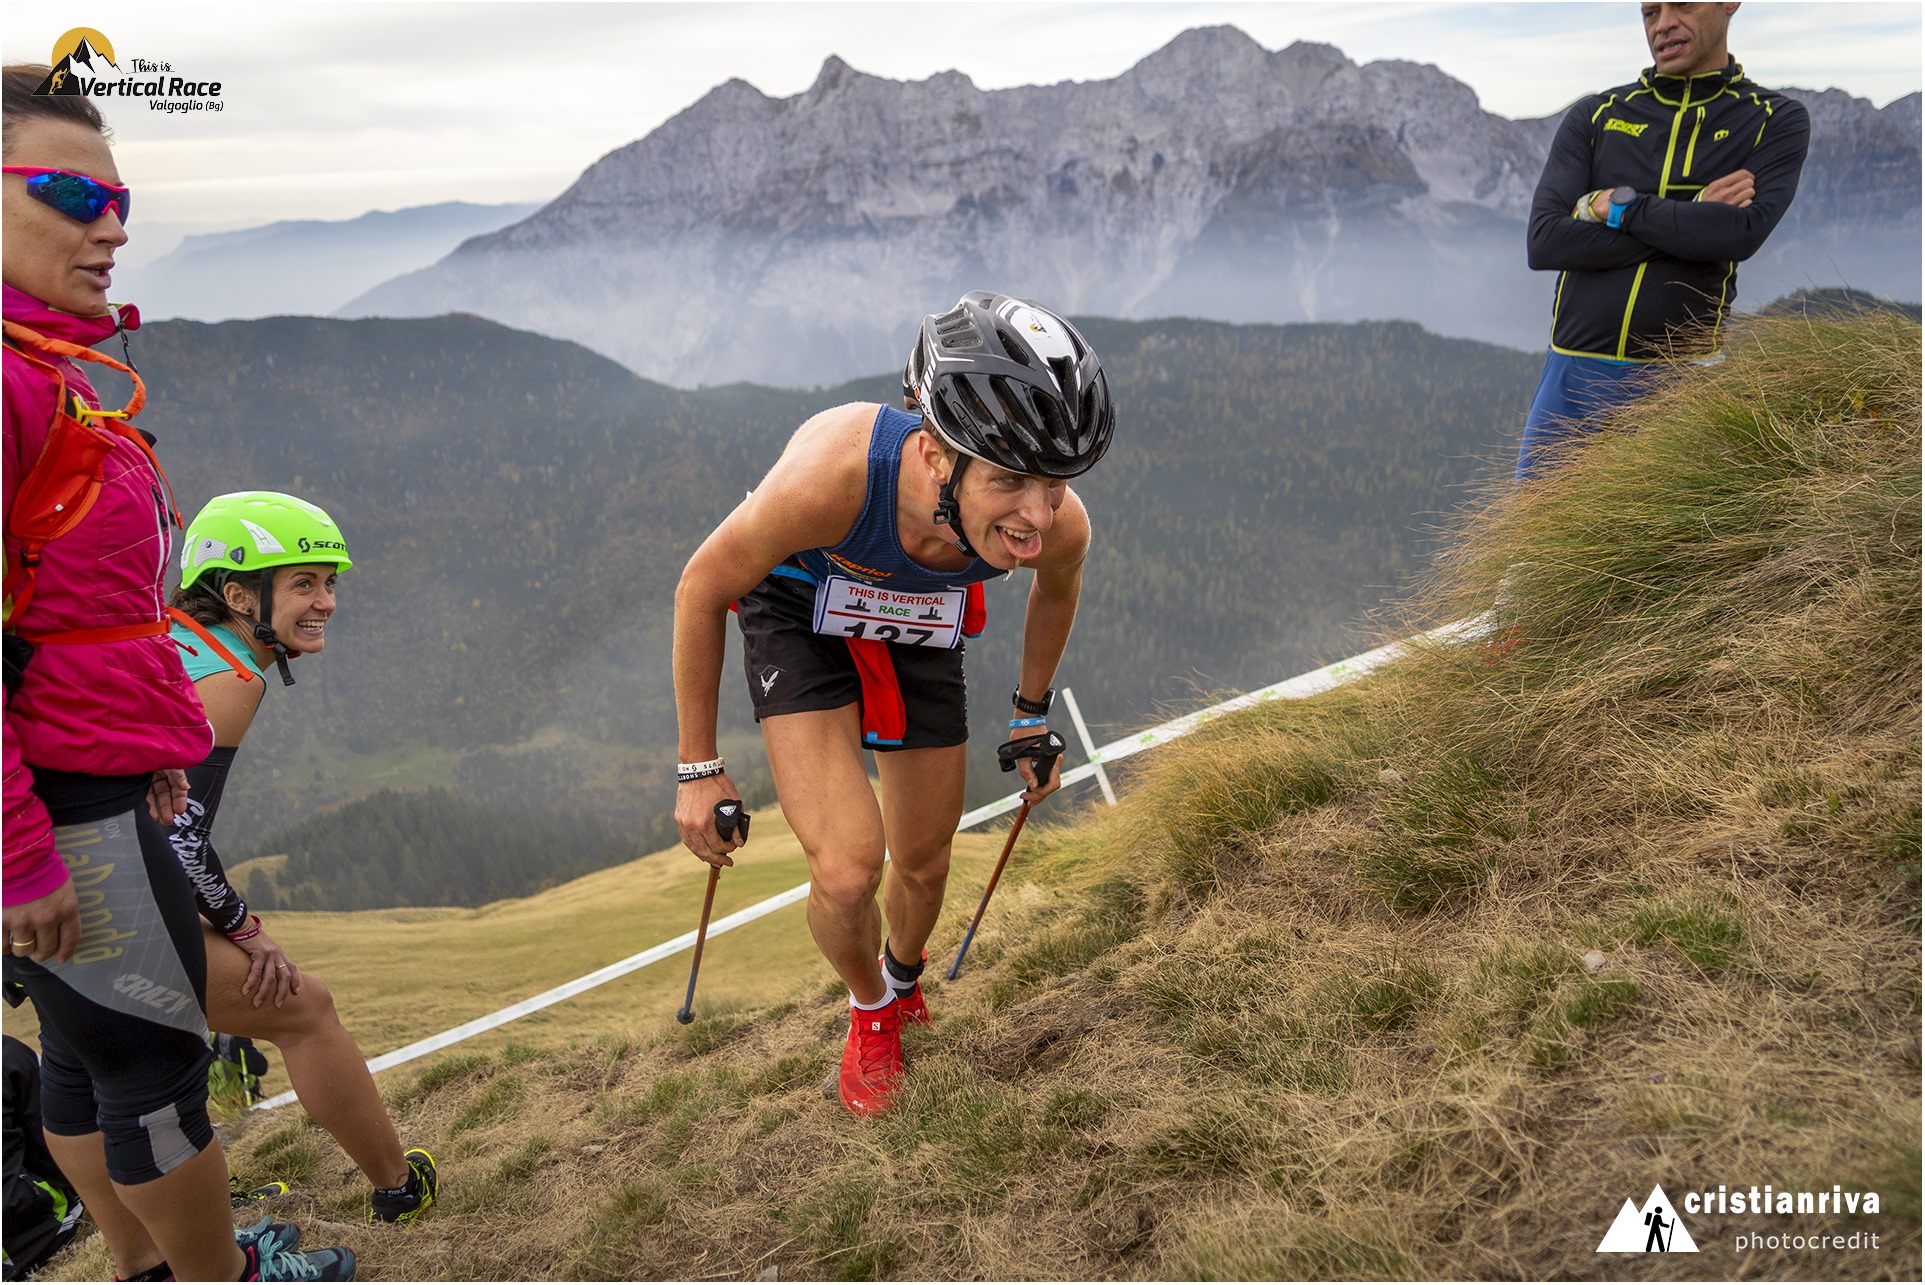 This is Vertical Race - Luca in azione (Foto Cristian Riva)